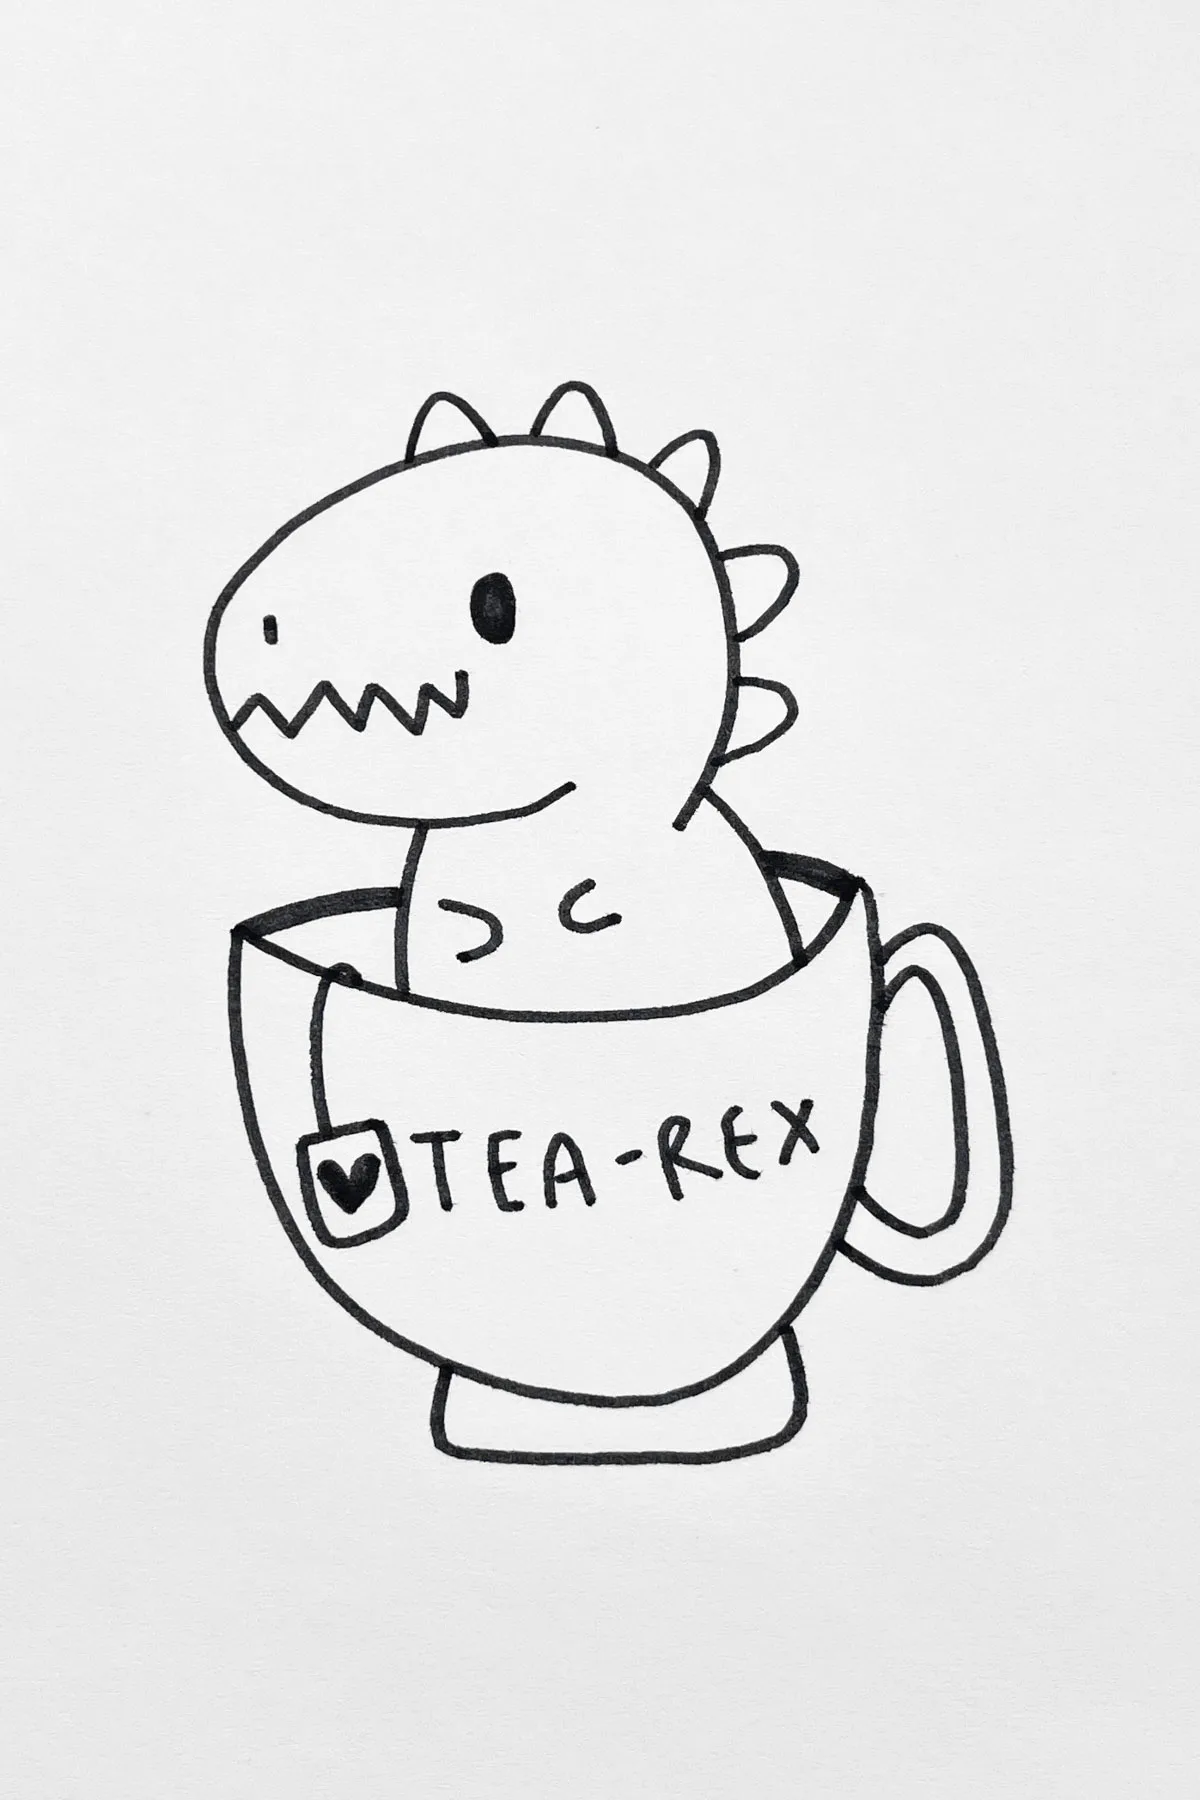 Tea-Rex drawing